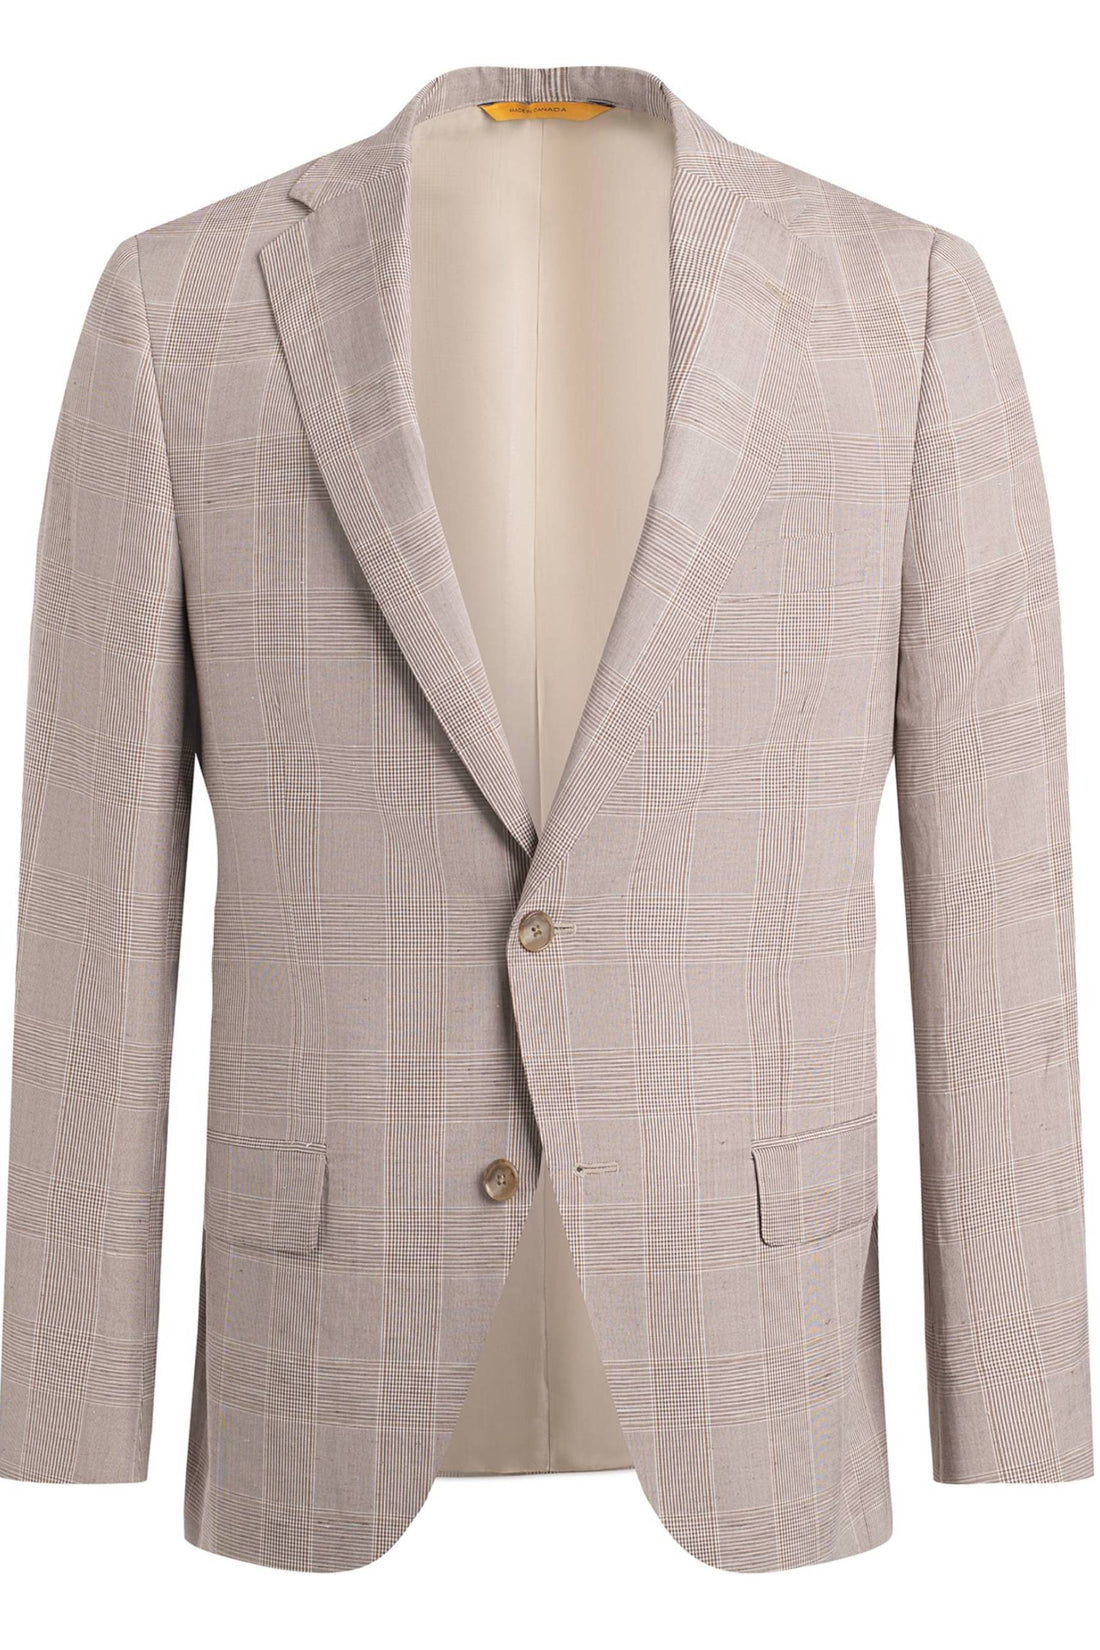 Heritage Gold Tan White Plaid Silk Linen Suit Front Jacket